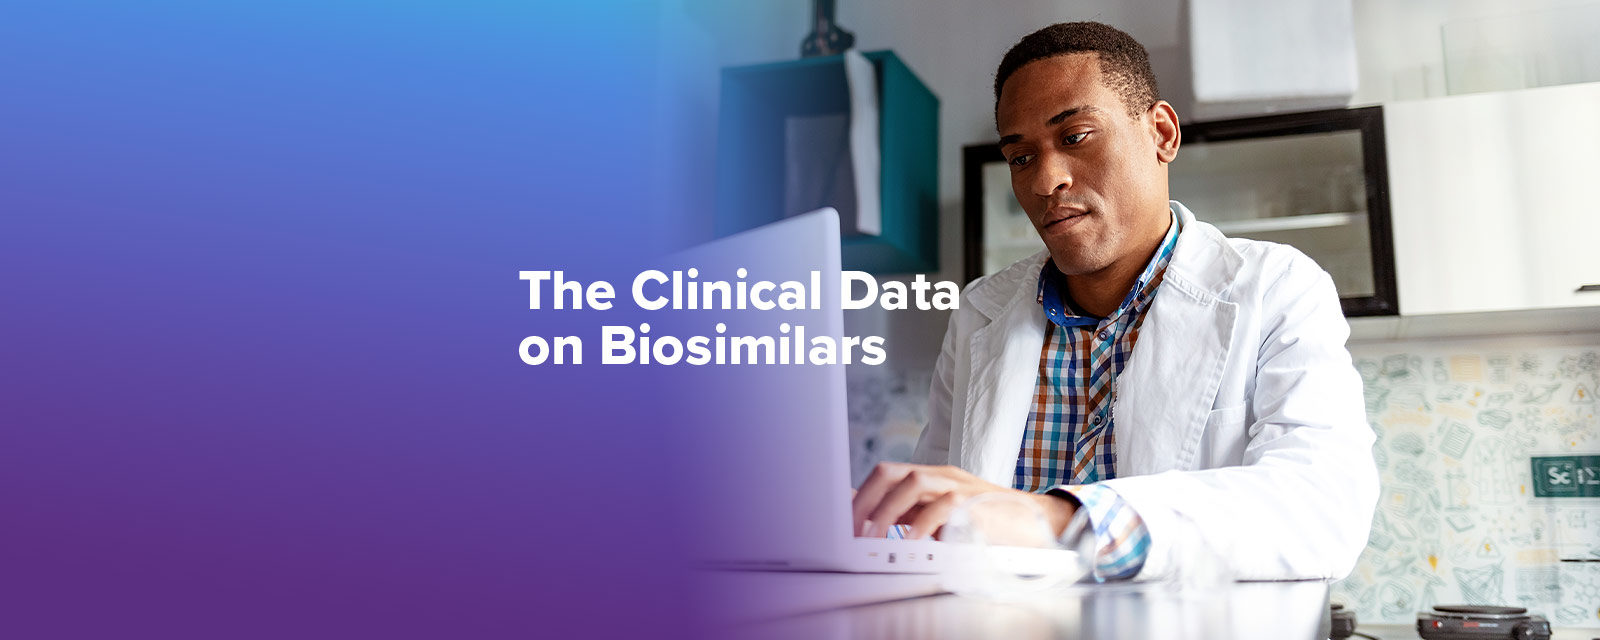 The Clinical Data on Biosimilars